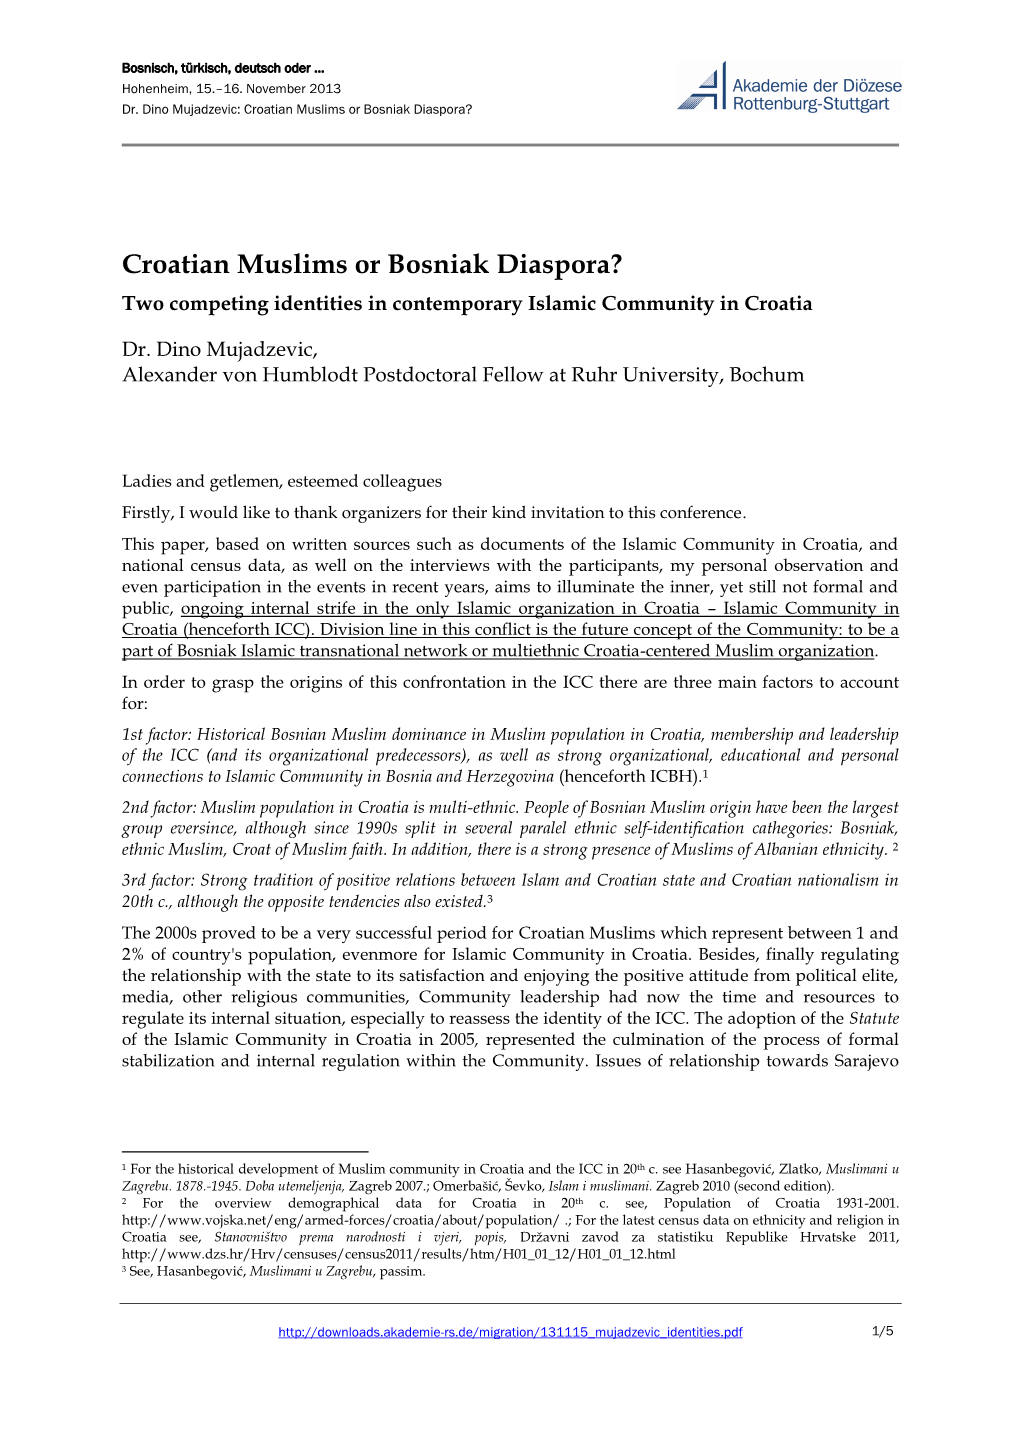 Croatian Muslims Or Bosniak Diaspora? Two Competing Identities in Contemporary Islamic Community in Croatia